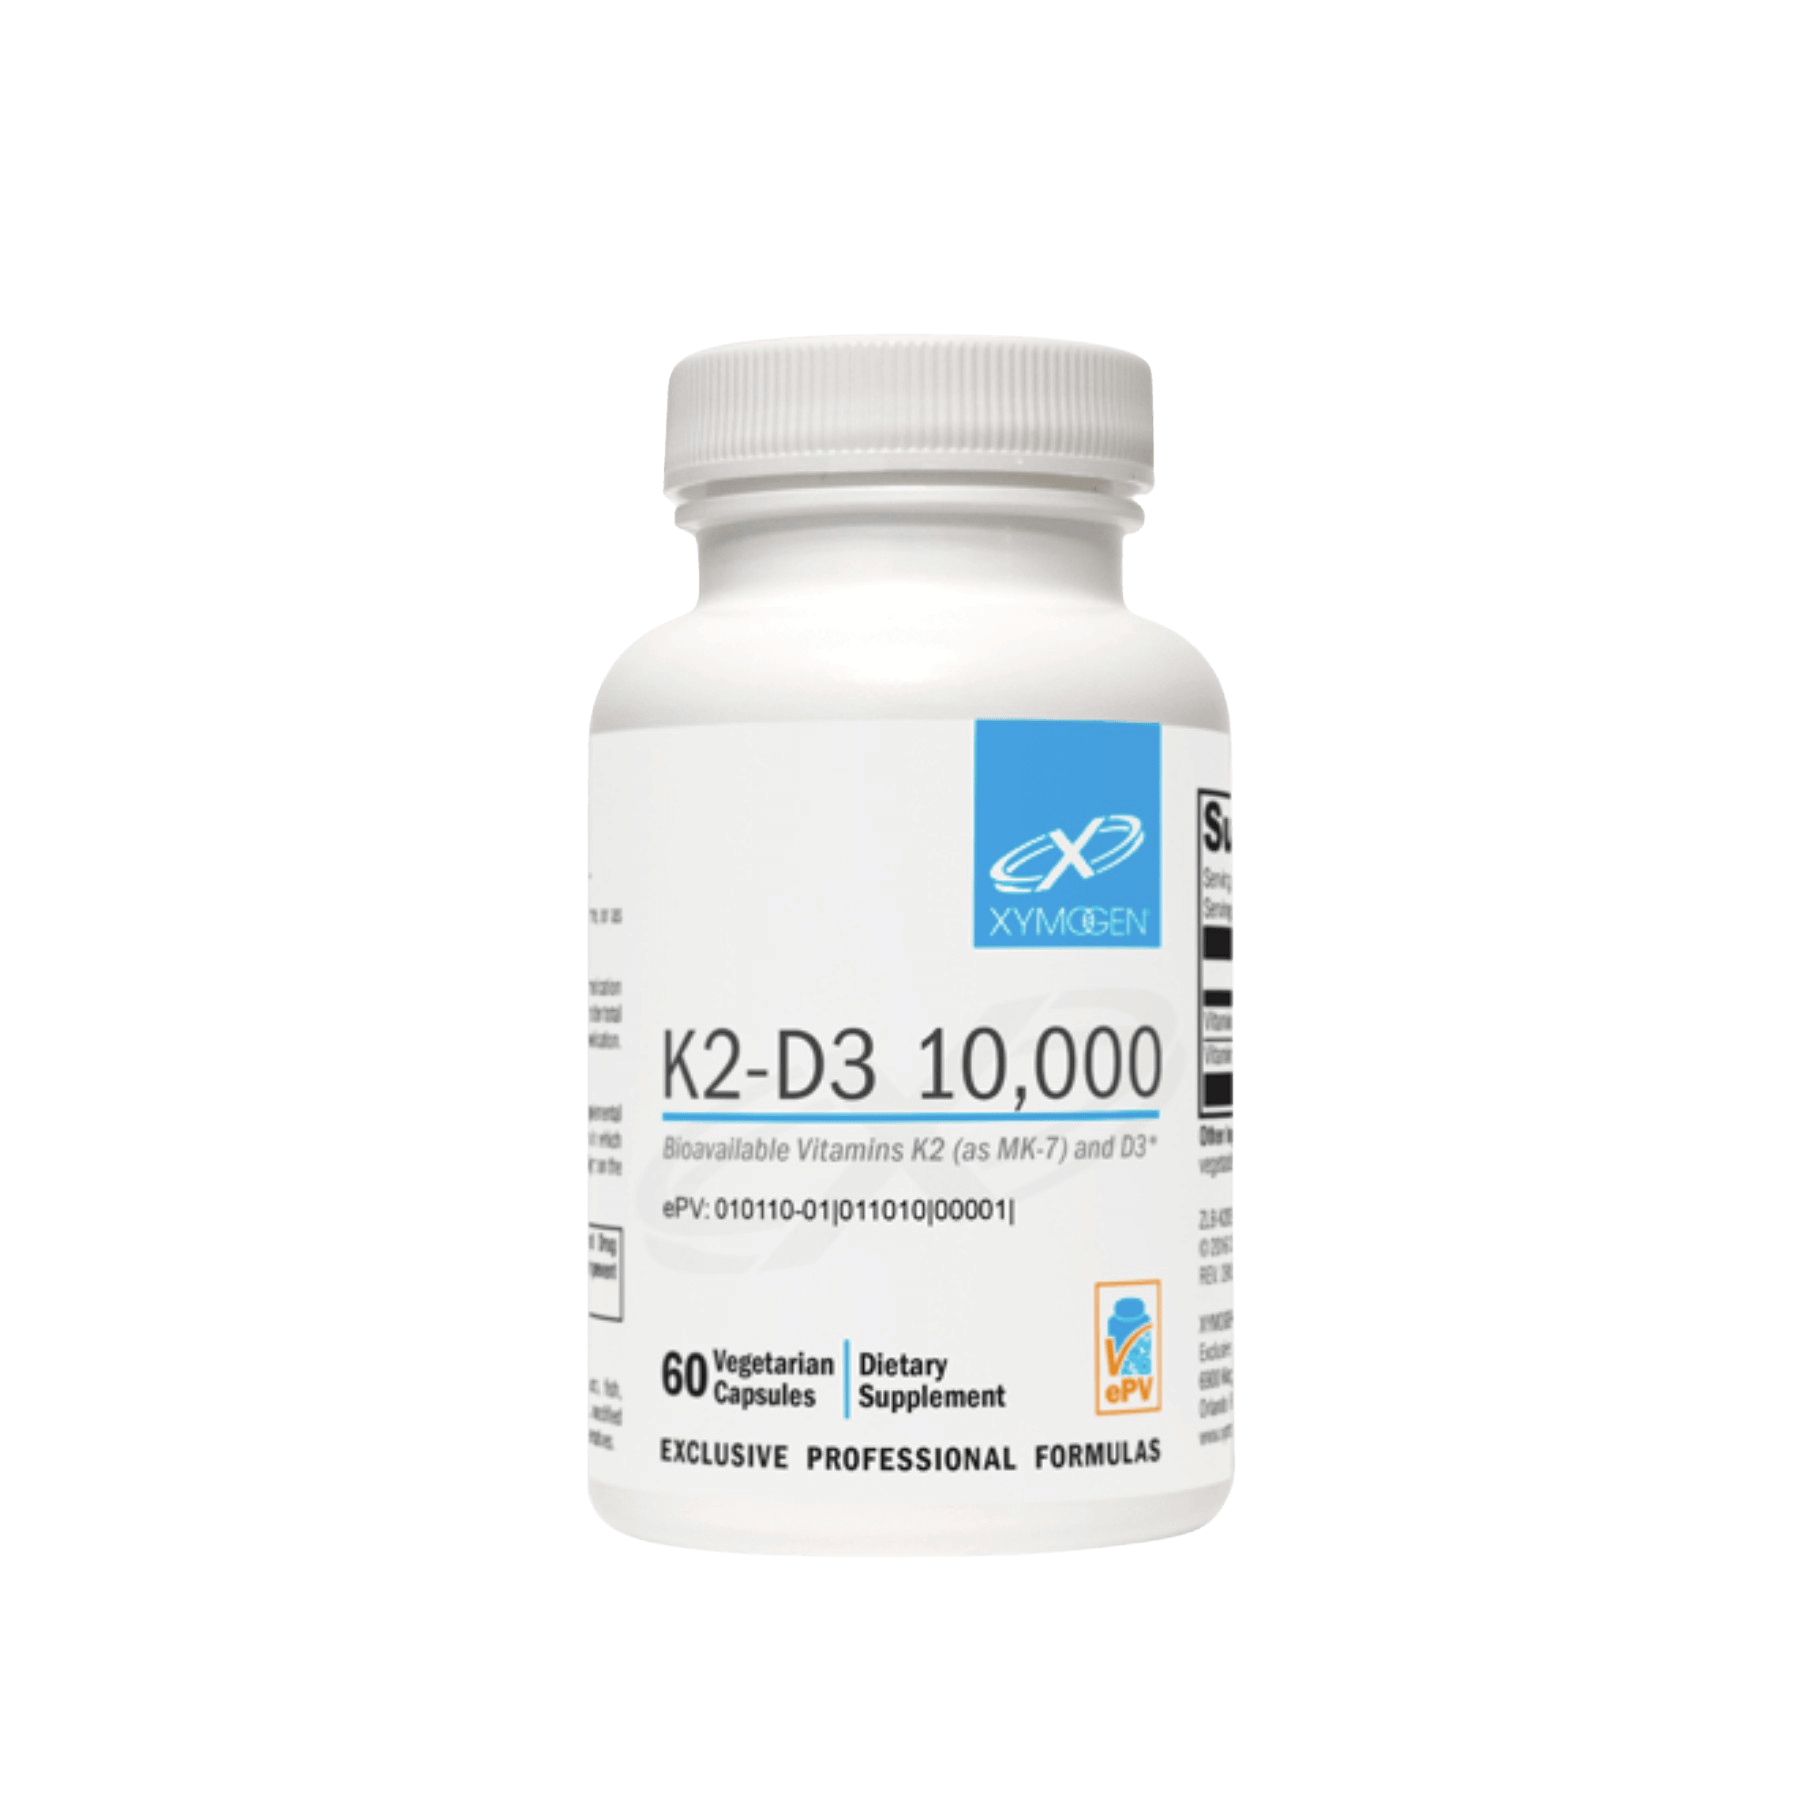 Xymogen K2-D3 10,000 capsules